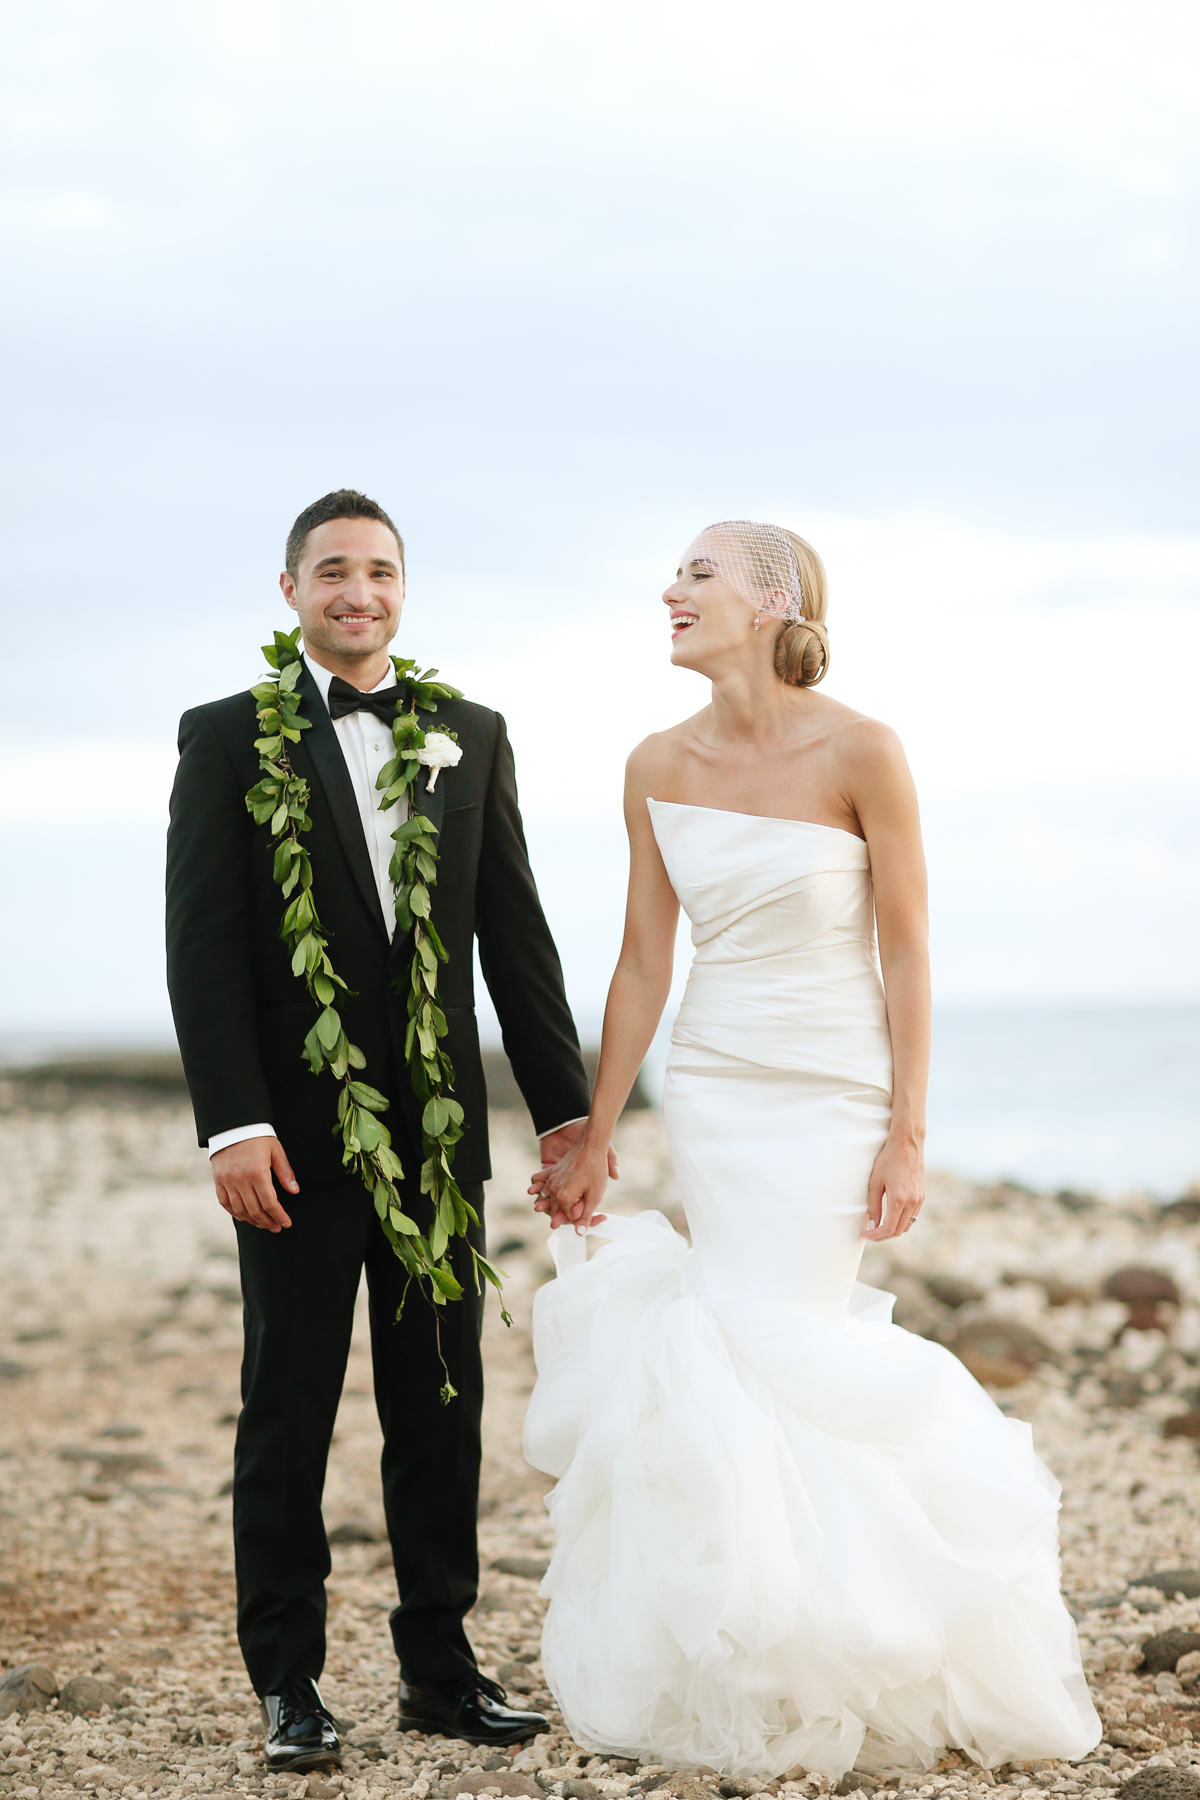 kimberly pesch, kimberly lapides, eatsleepwear, Alison Conklin, Wedding, Hawaii, Maui, Olowalu Plantation House, Beach Wedding